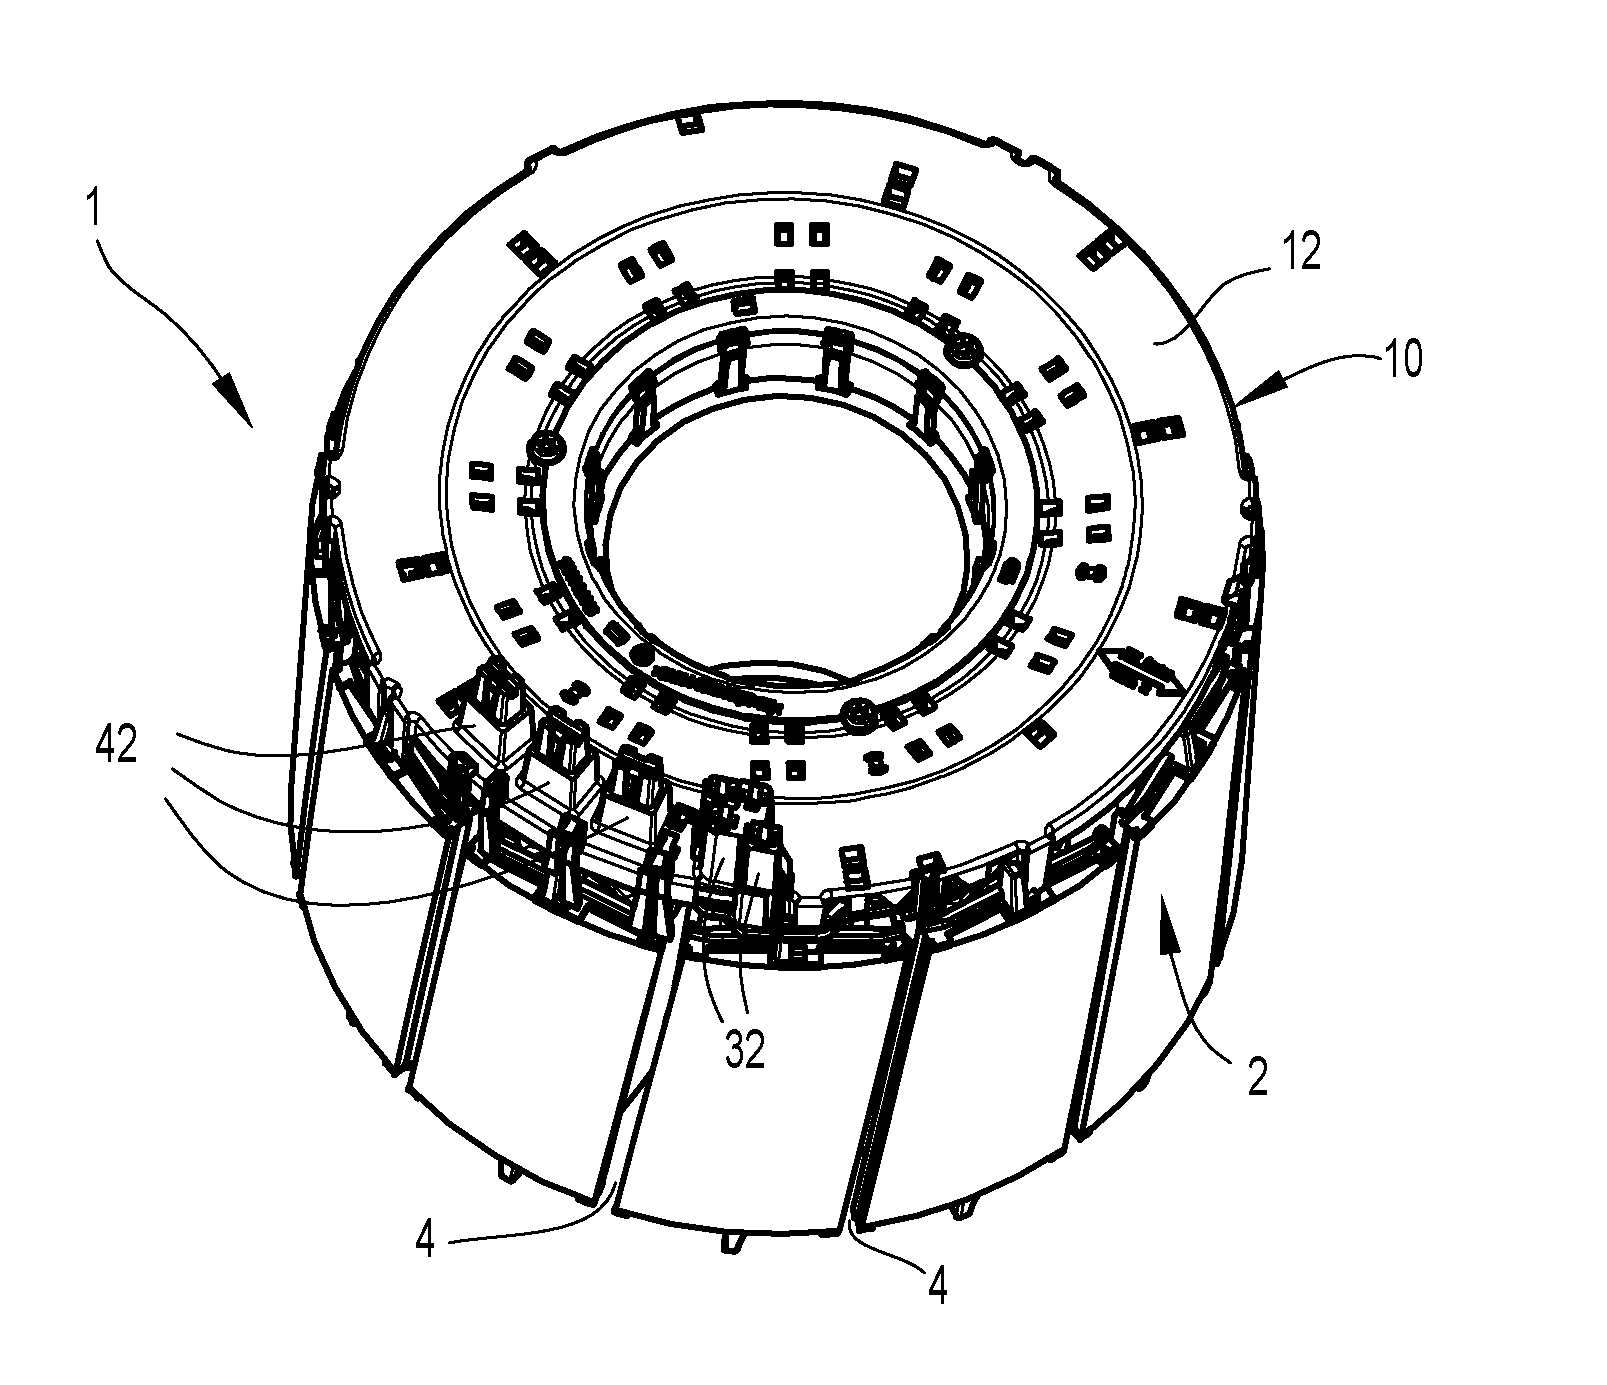 Stator arrangement for an electric motor